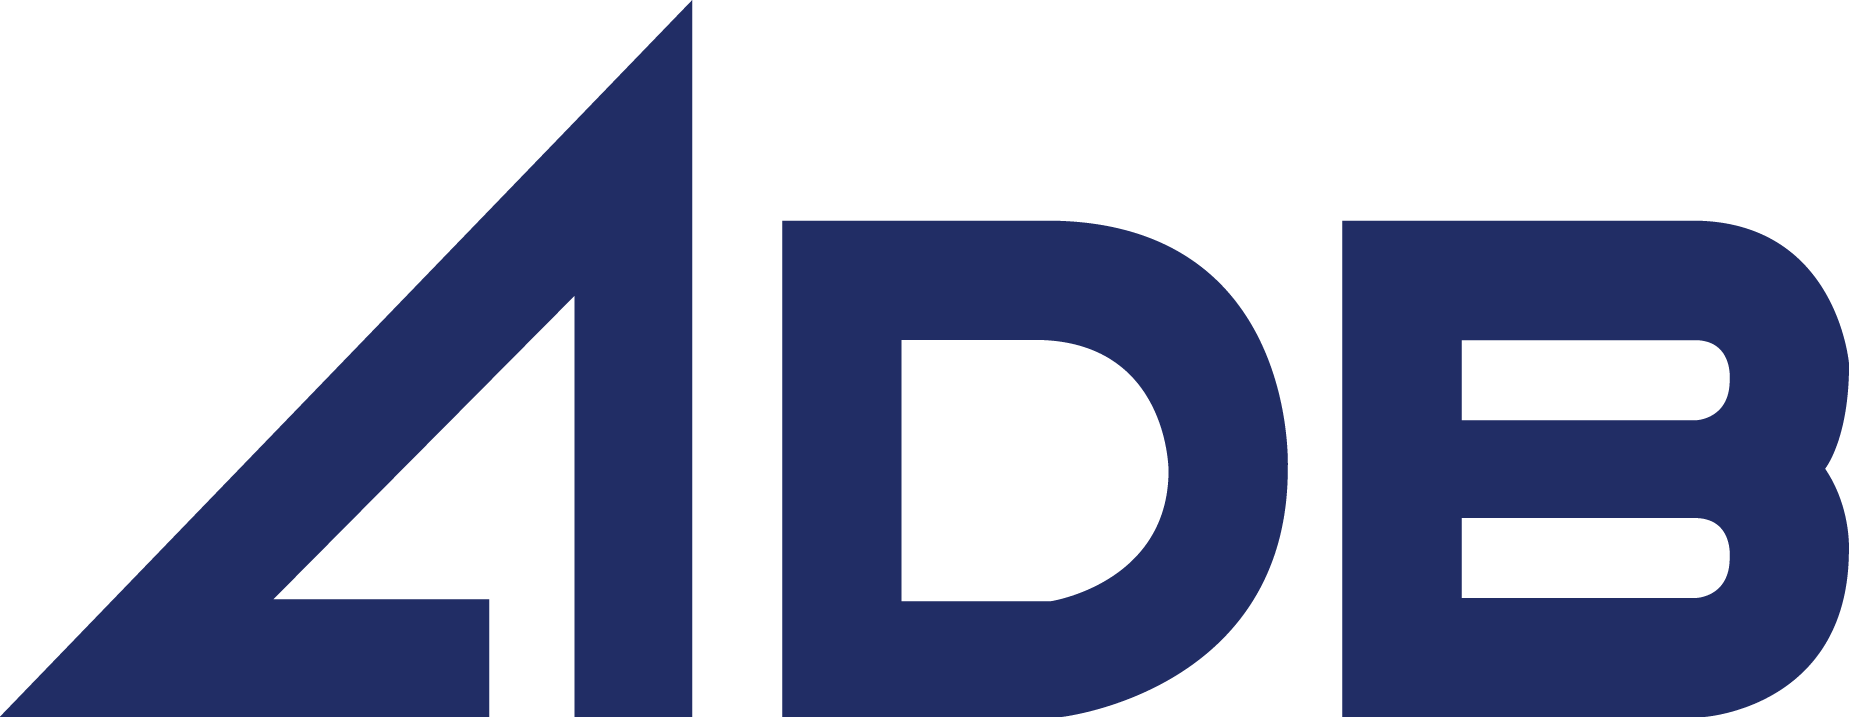 ADB Companies logo